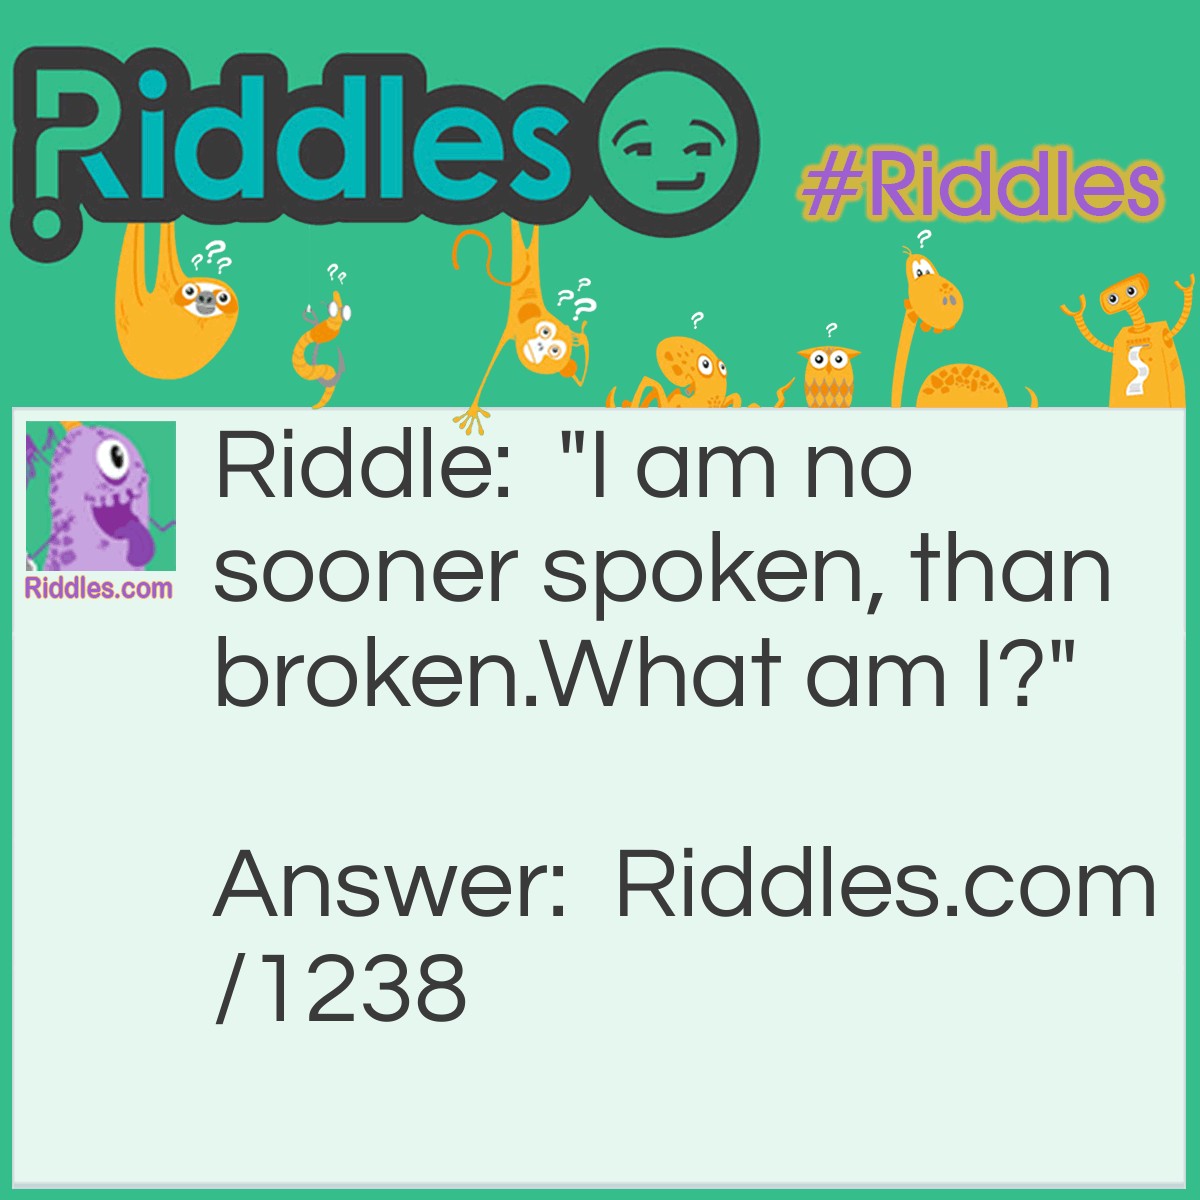 Riddle: "I am no sooner spoken, than broken.
What am I?" Answer: Silence.